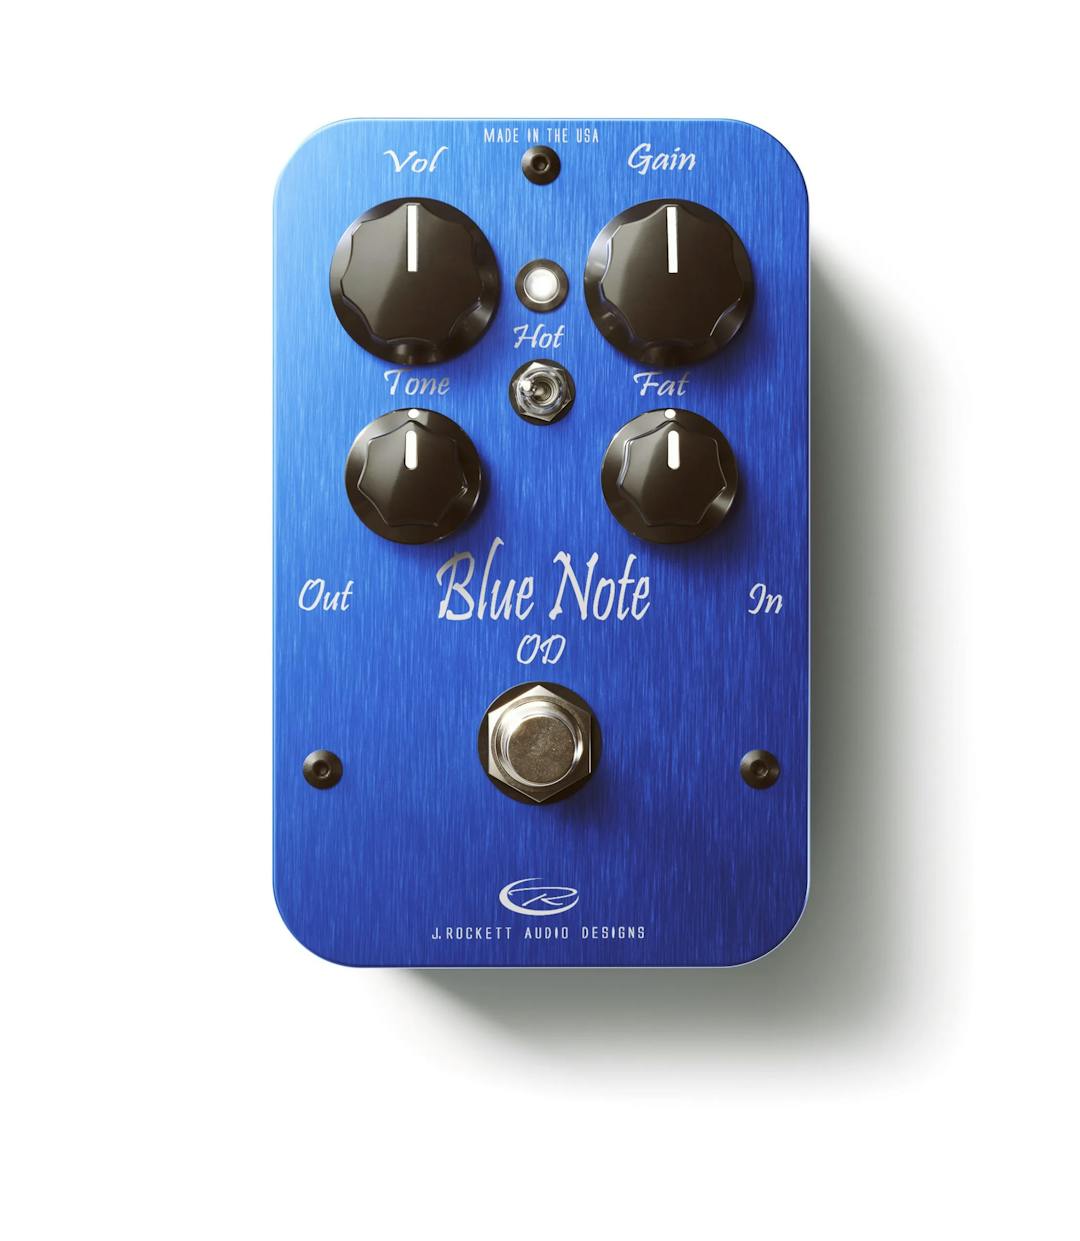 Blue Note Guitar Pedal By J. Rockett